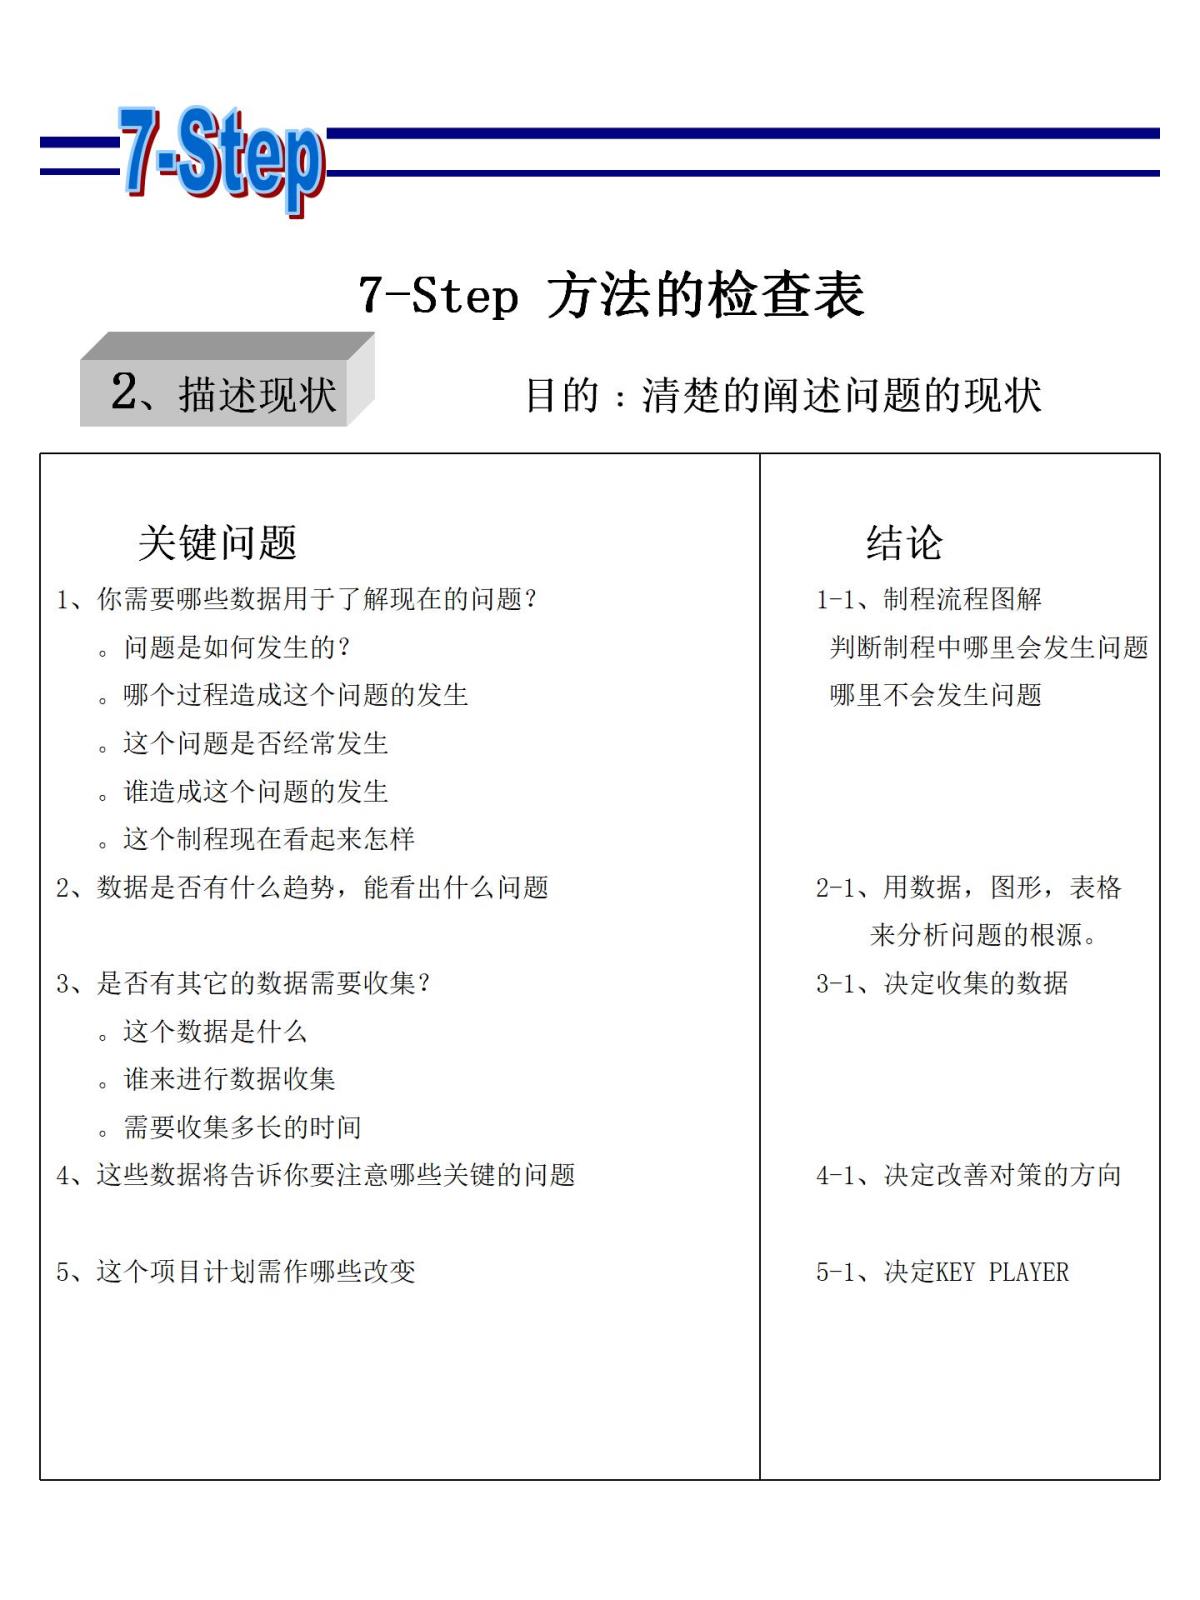 7-step方法_02.jpg